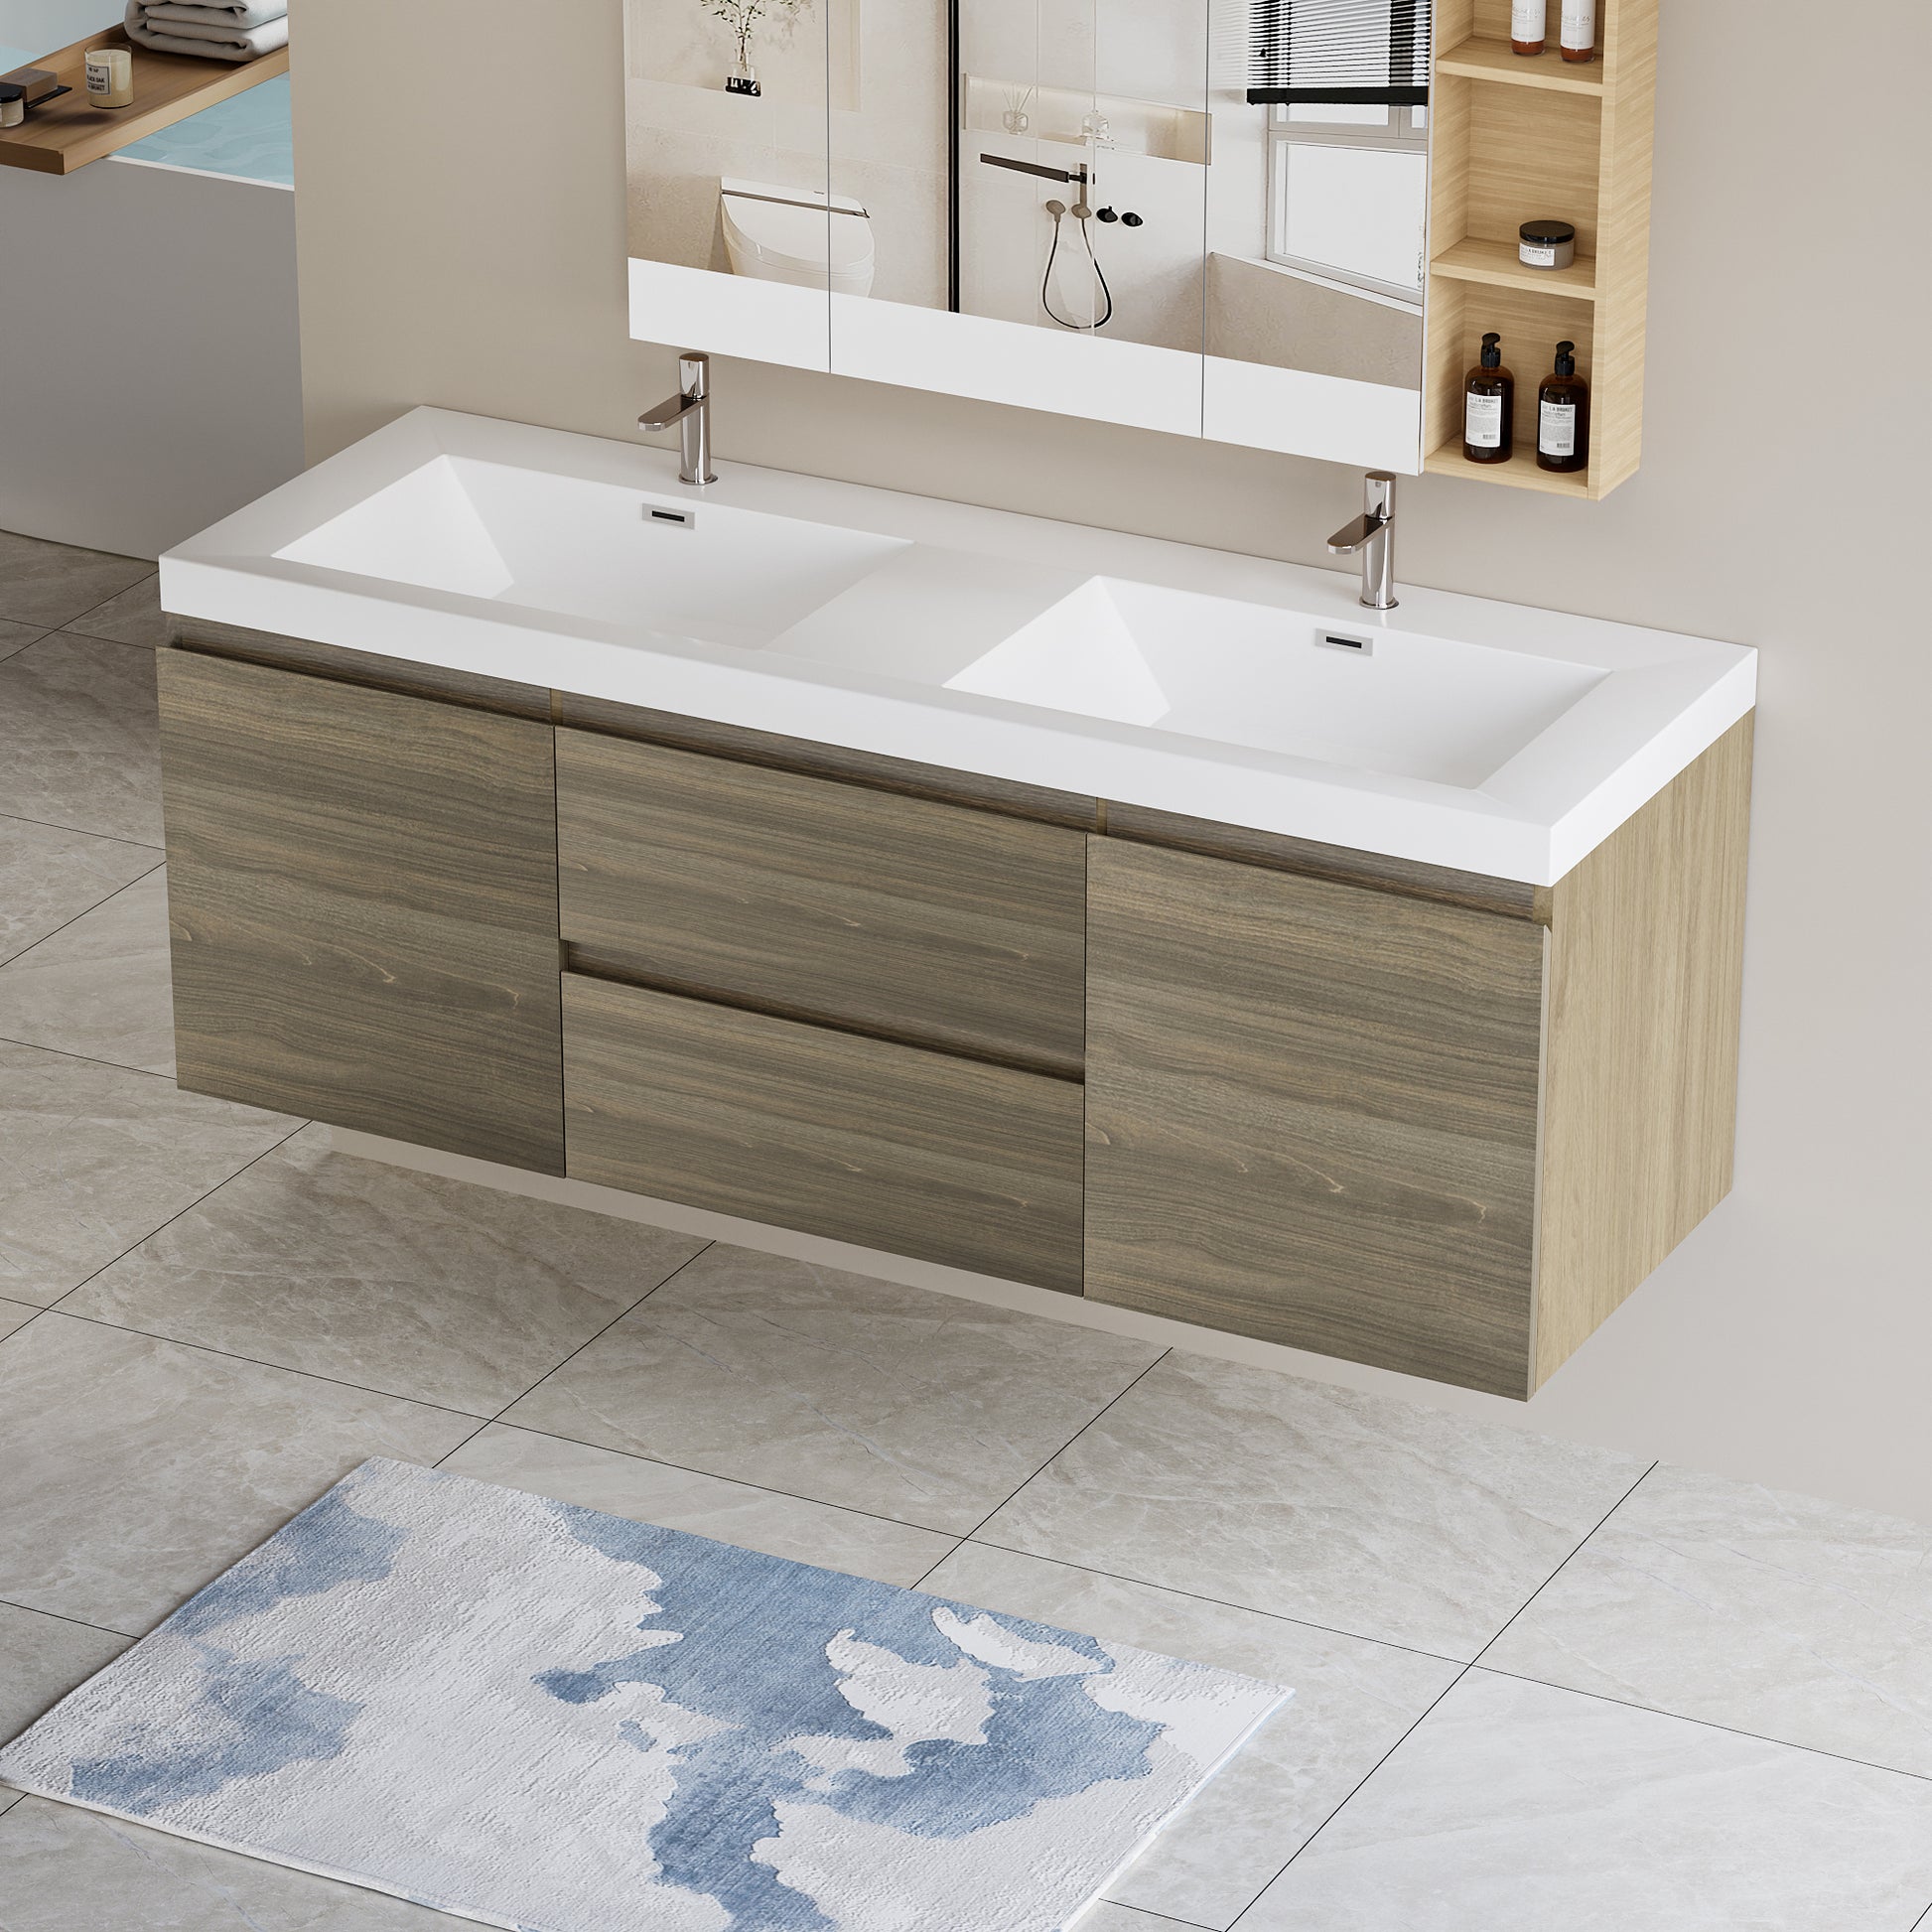 60" Floating Bathroom Vanity with Sink, Modern Wall 2-grey-2-bathroom-wall mounted-plywood